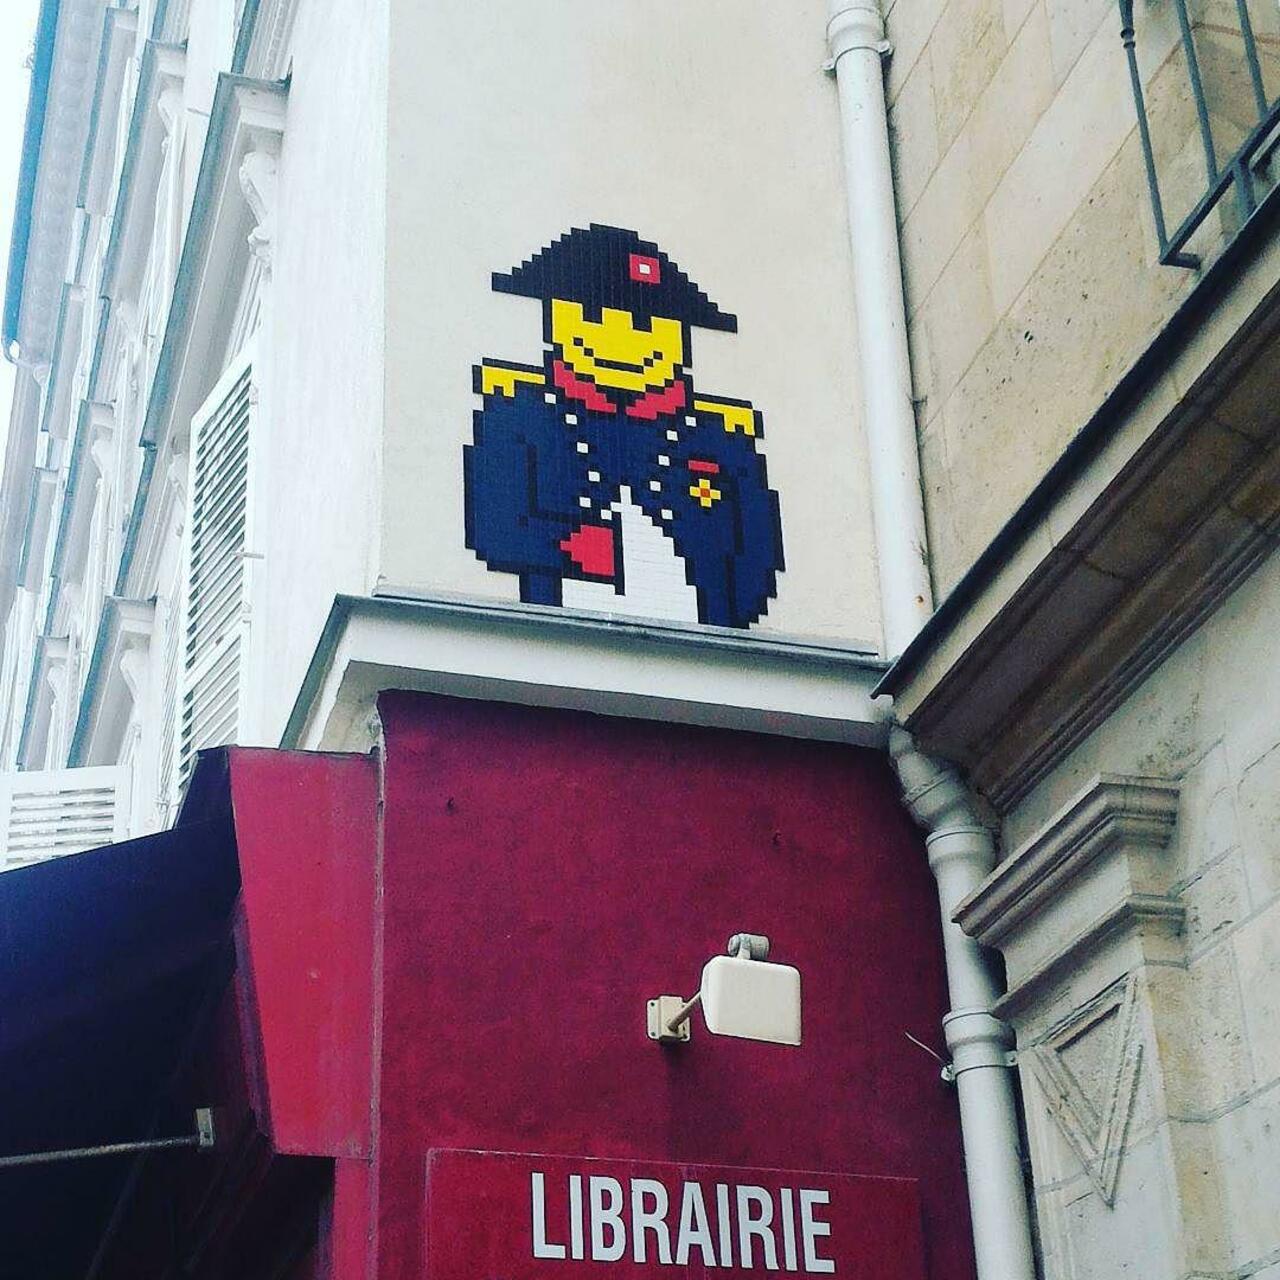 circumjacent_fr: #Paris #graffiti photo by emmanuel_pujol http://ift.tt/1jKP6vY #StreetArt http://t.co/MDp2ne3IPC